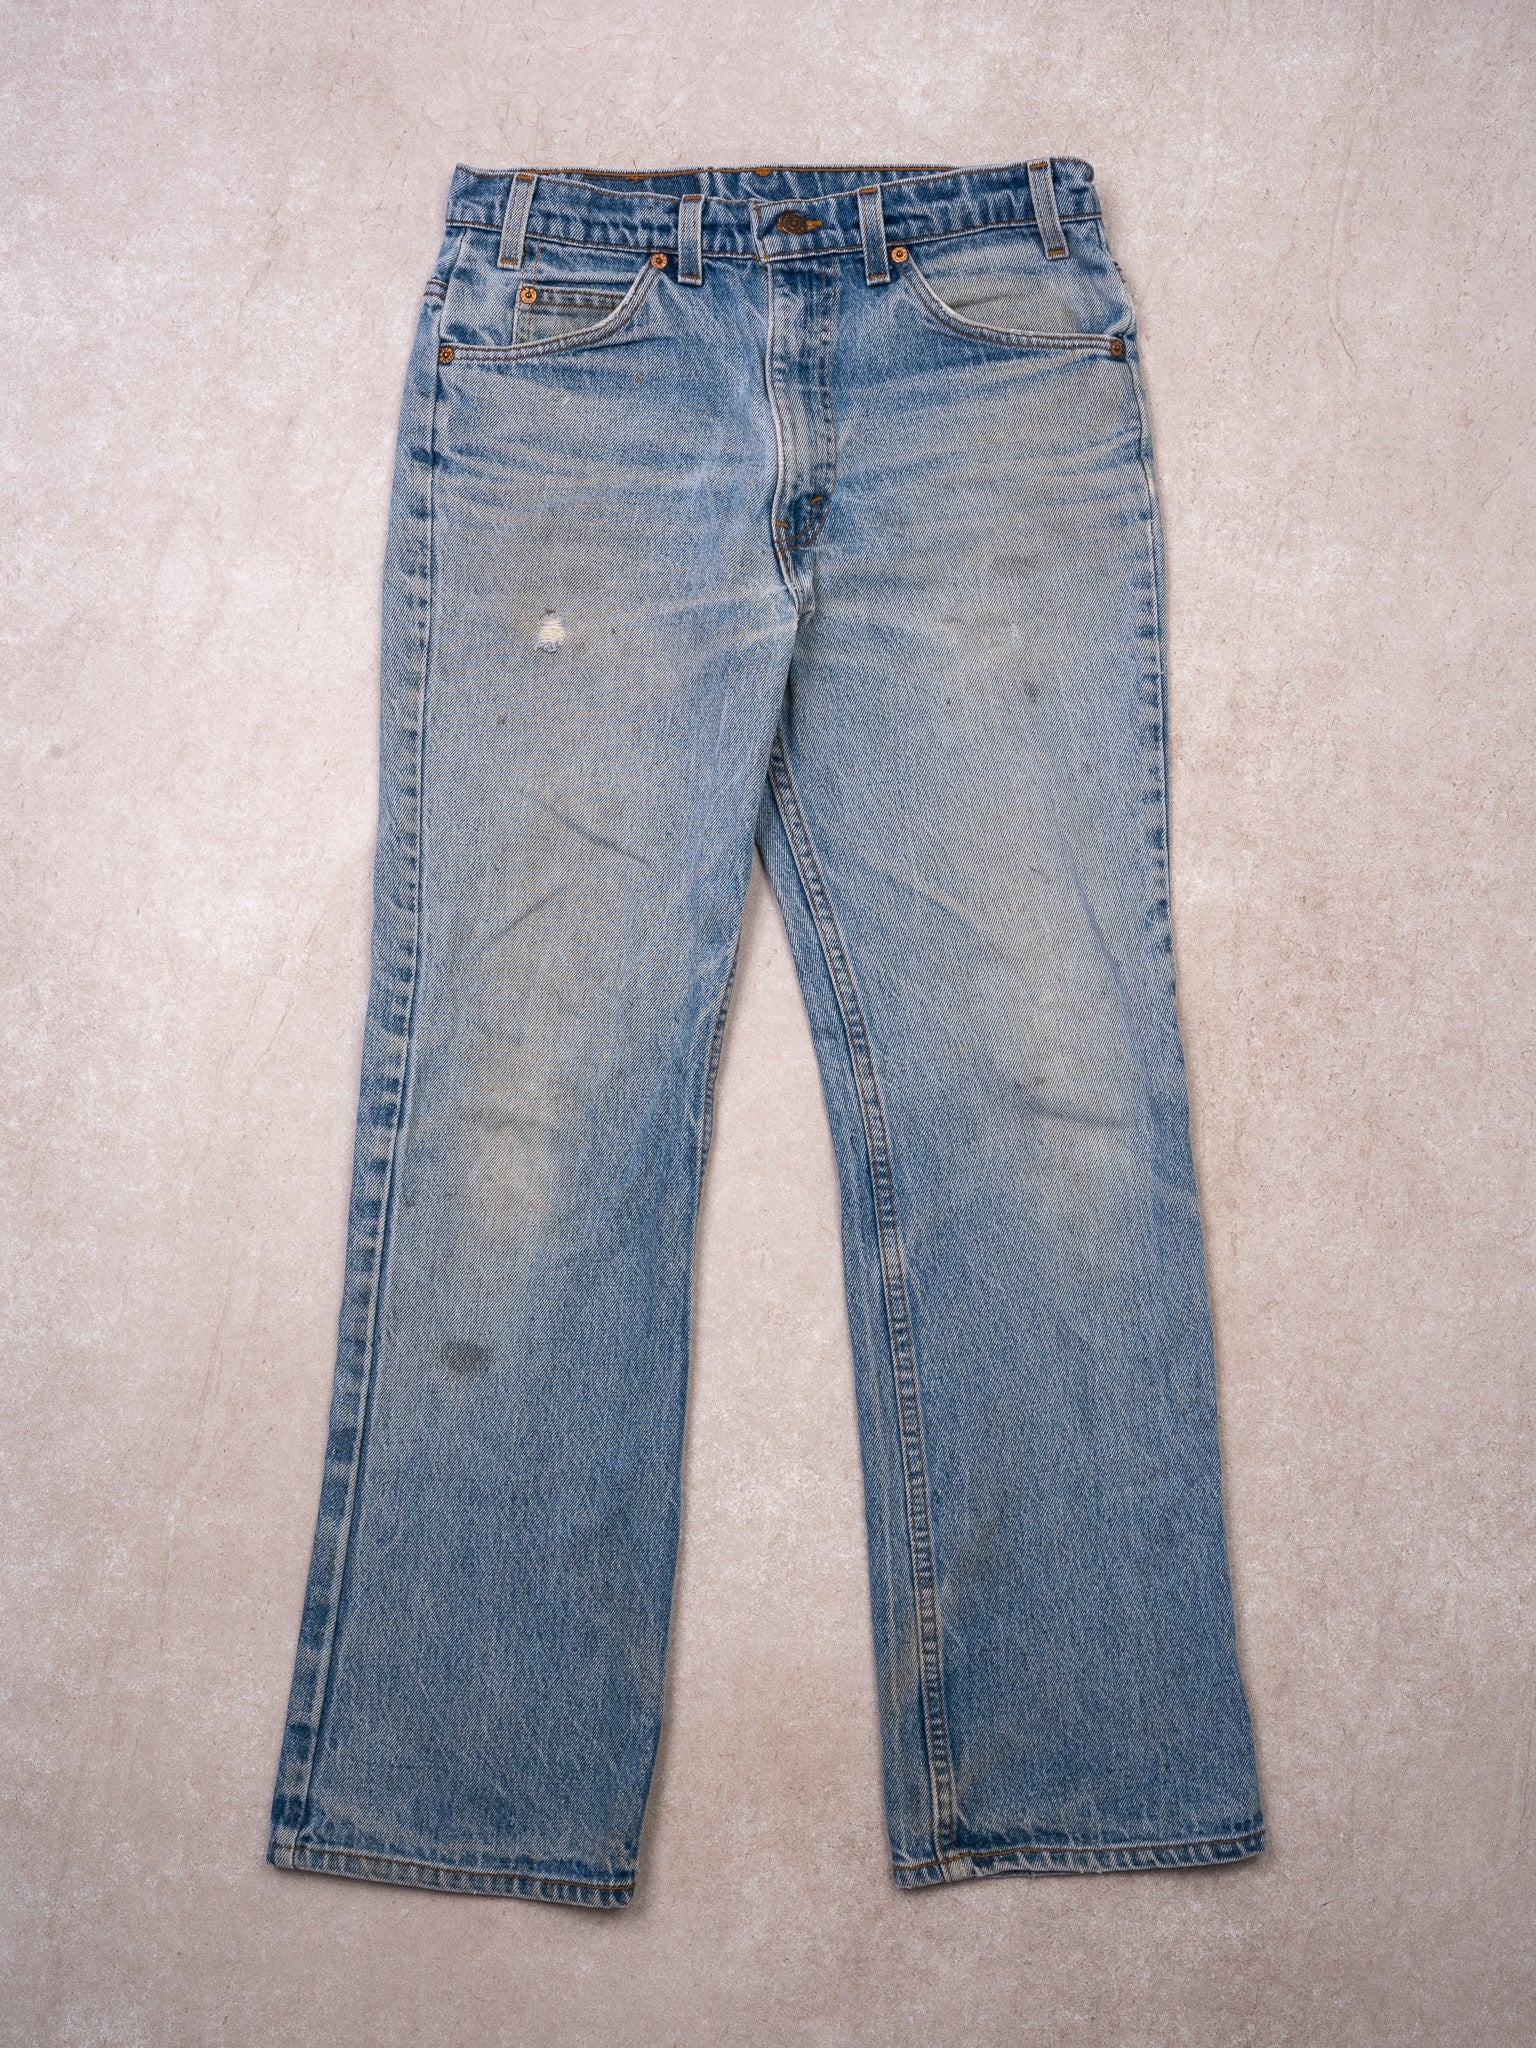 Vintage Rugged Light Blue 517 Levi Jeans (30 x 30)